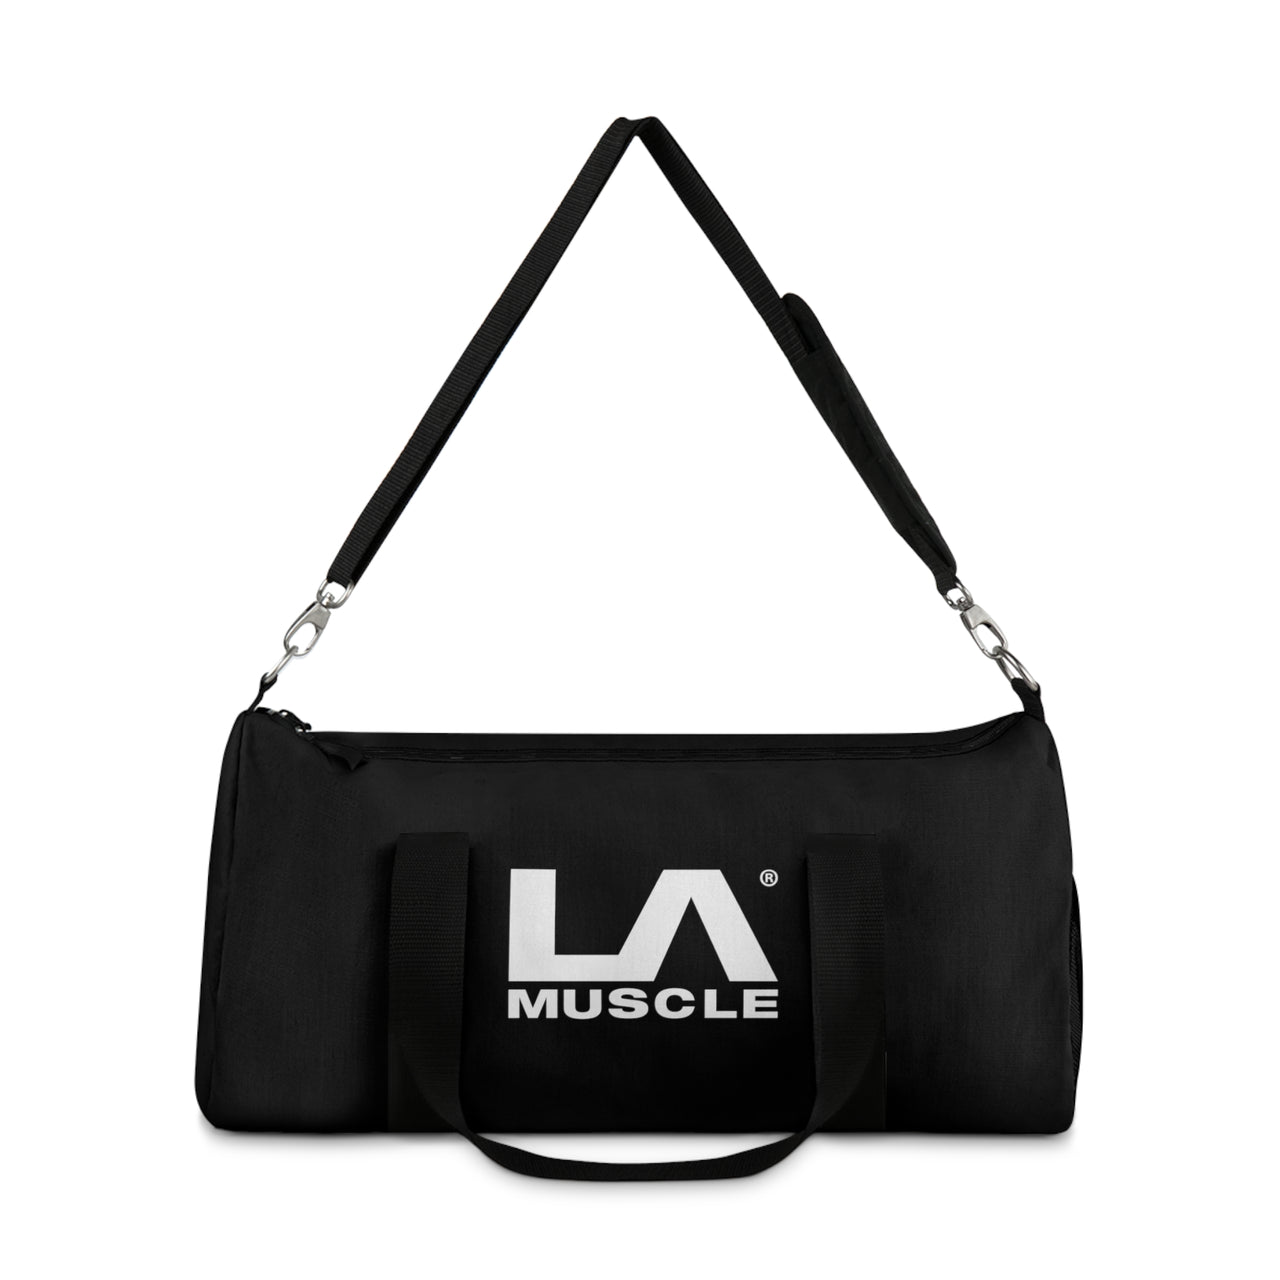 LA MUSCLE Official Duffel Bag